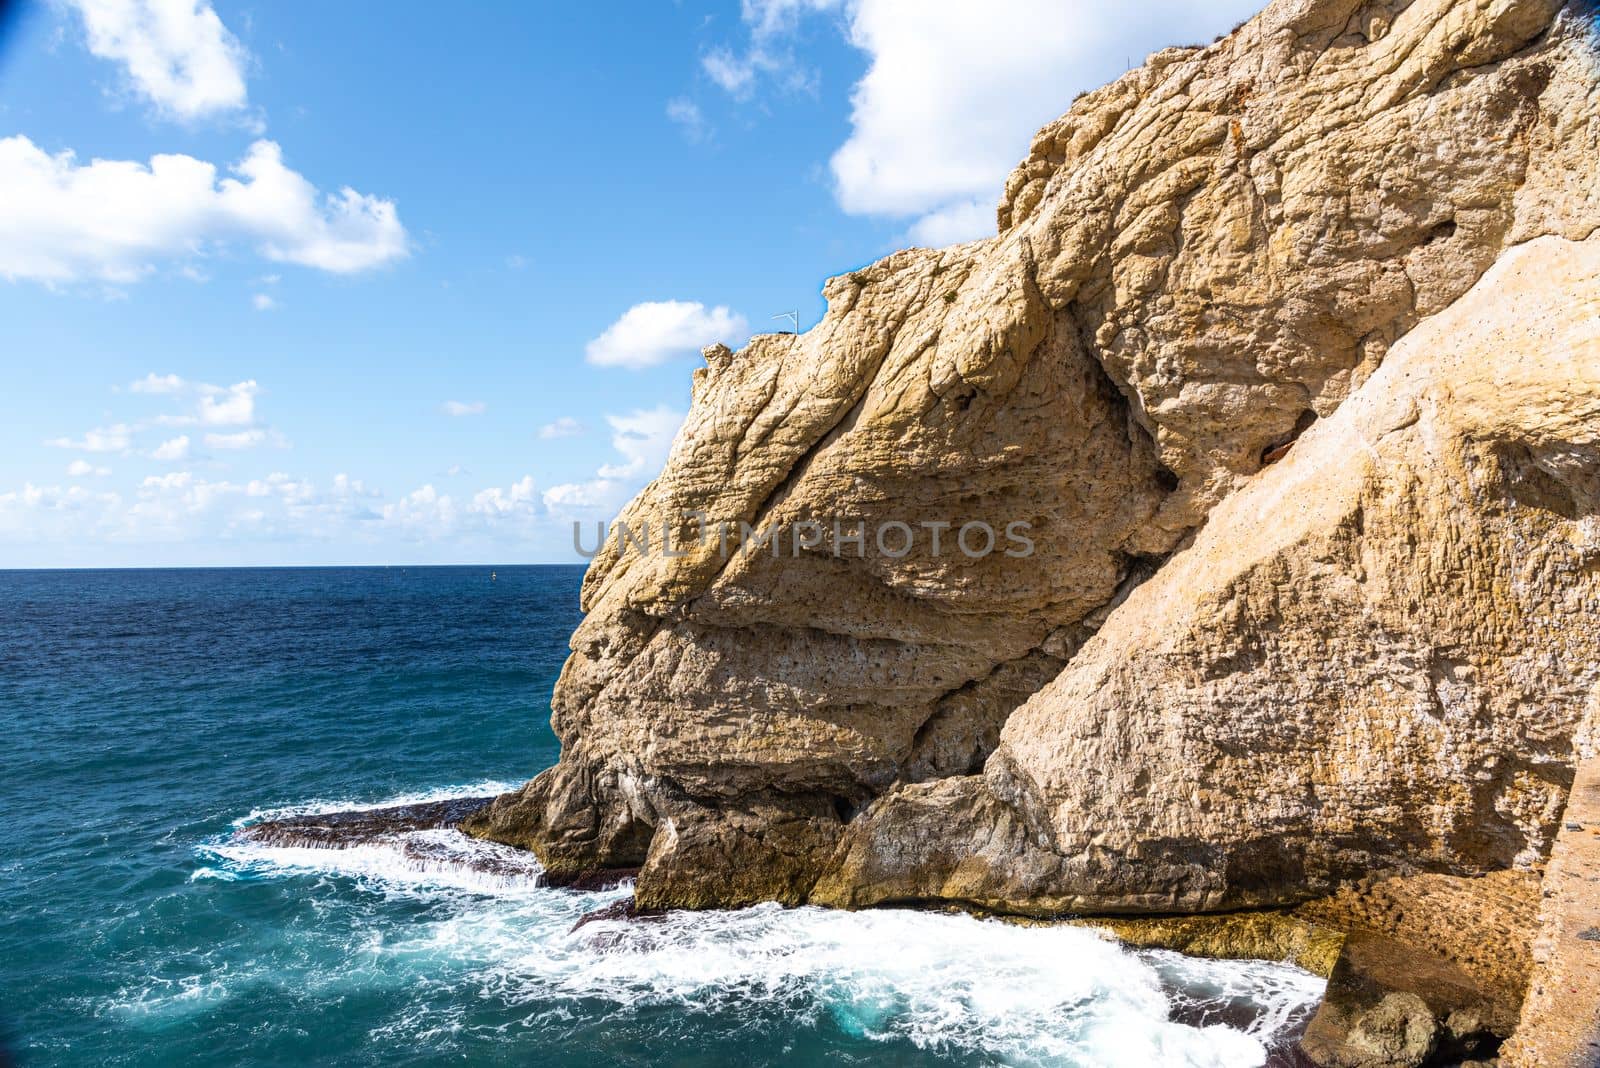 Rosh Hanikra grottoes rocks and caves famous nature tourist site (attraction) in north-western Israel (Galilee region), near Nahariya, in Mediterranean Sea. geological creation in coastline (shore). by avirozen